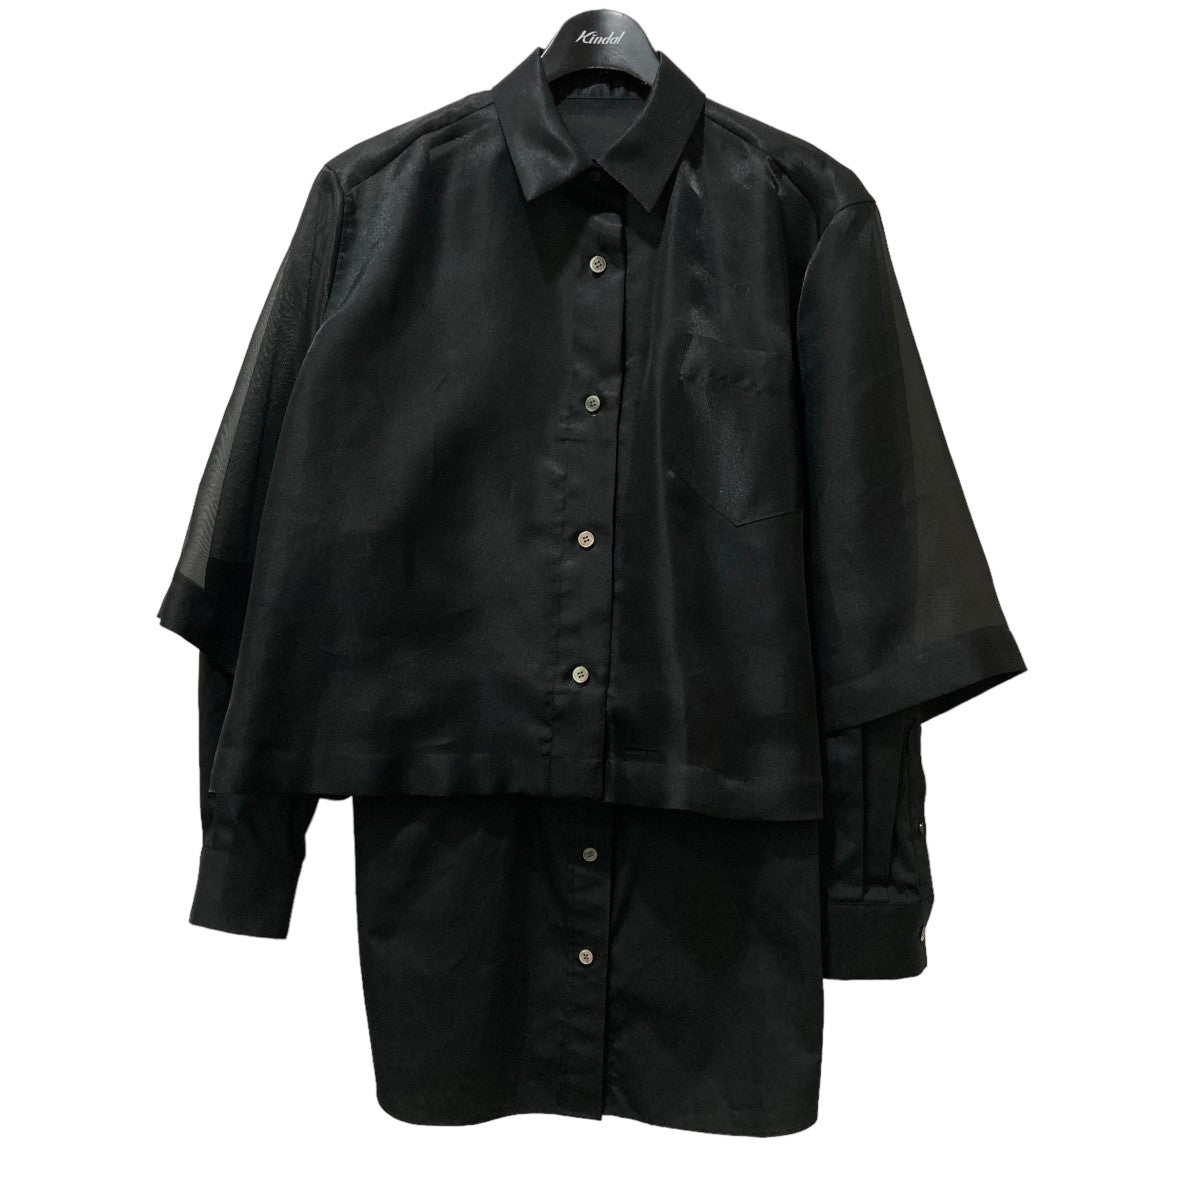 sacai(サカイ) ドッキング ドレスシャツ 21-05568 2105568 ブラック 